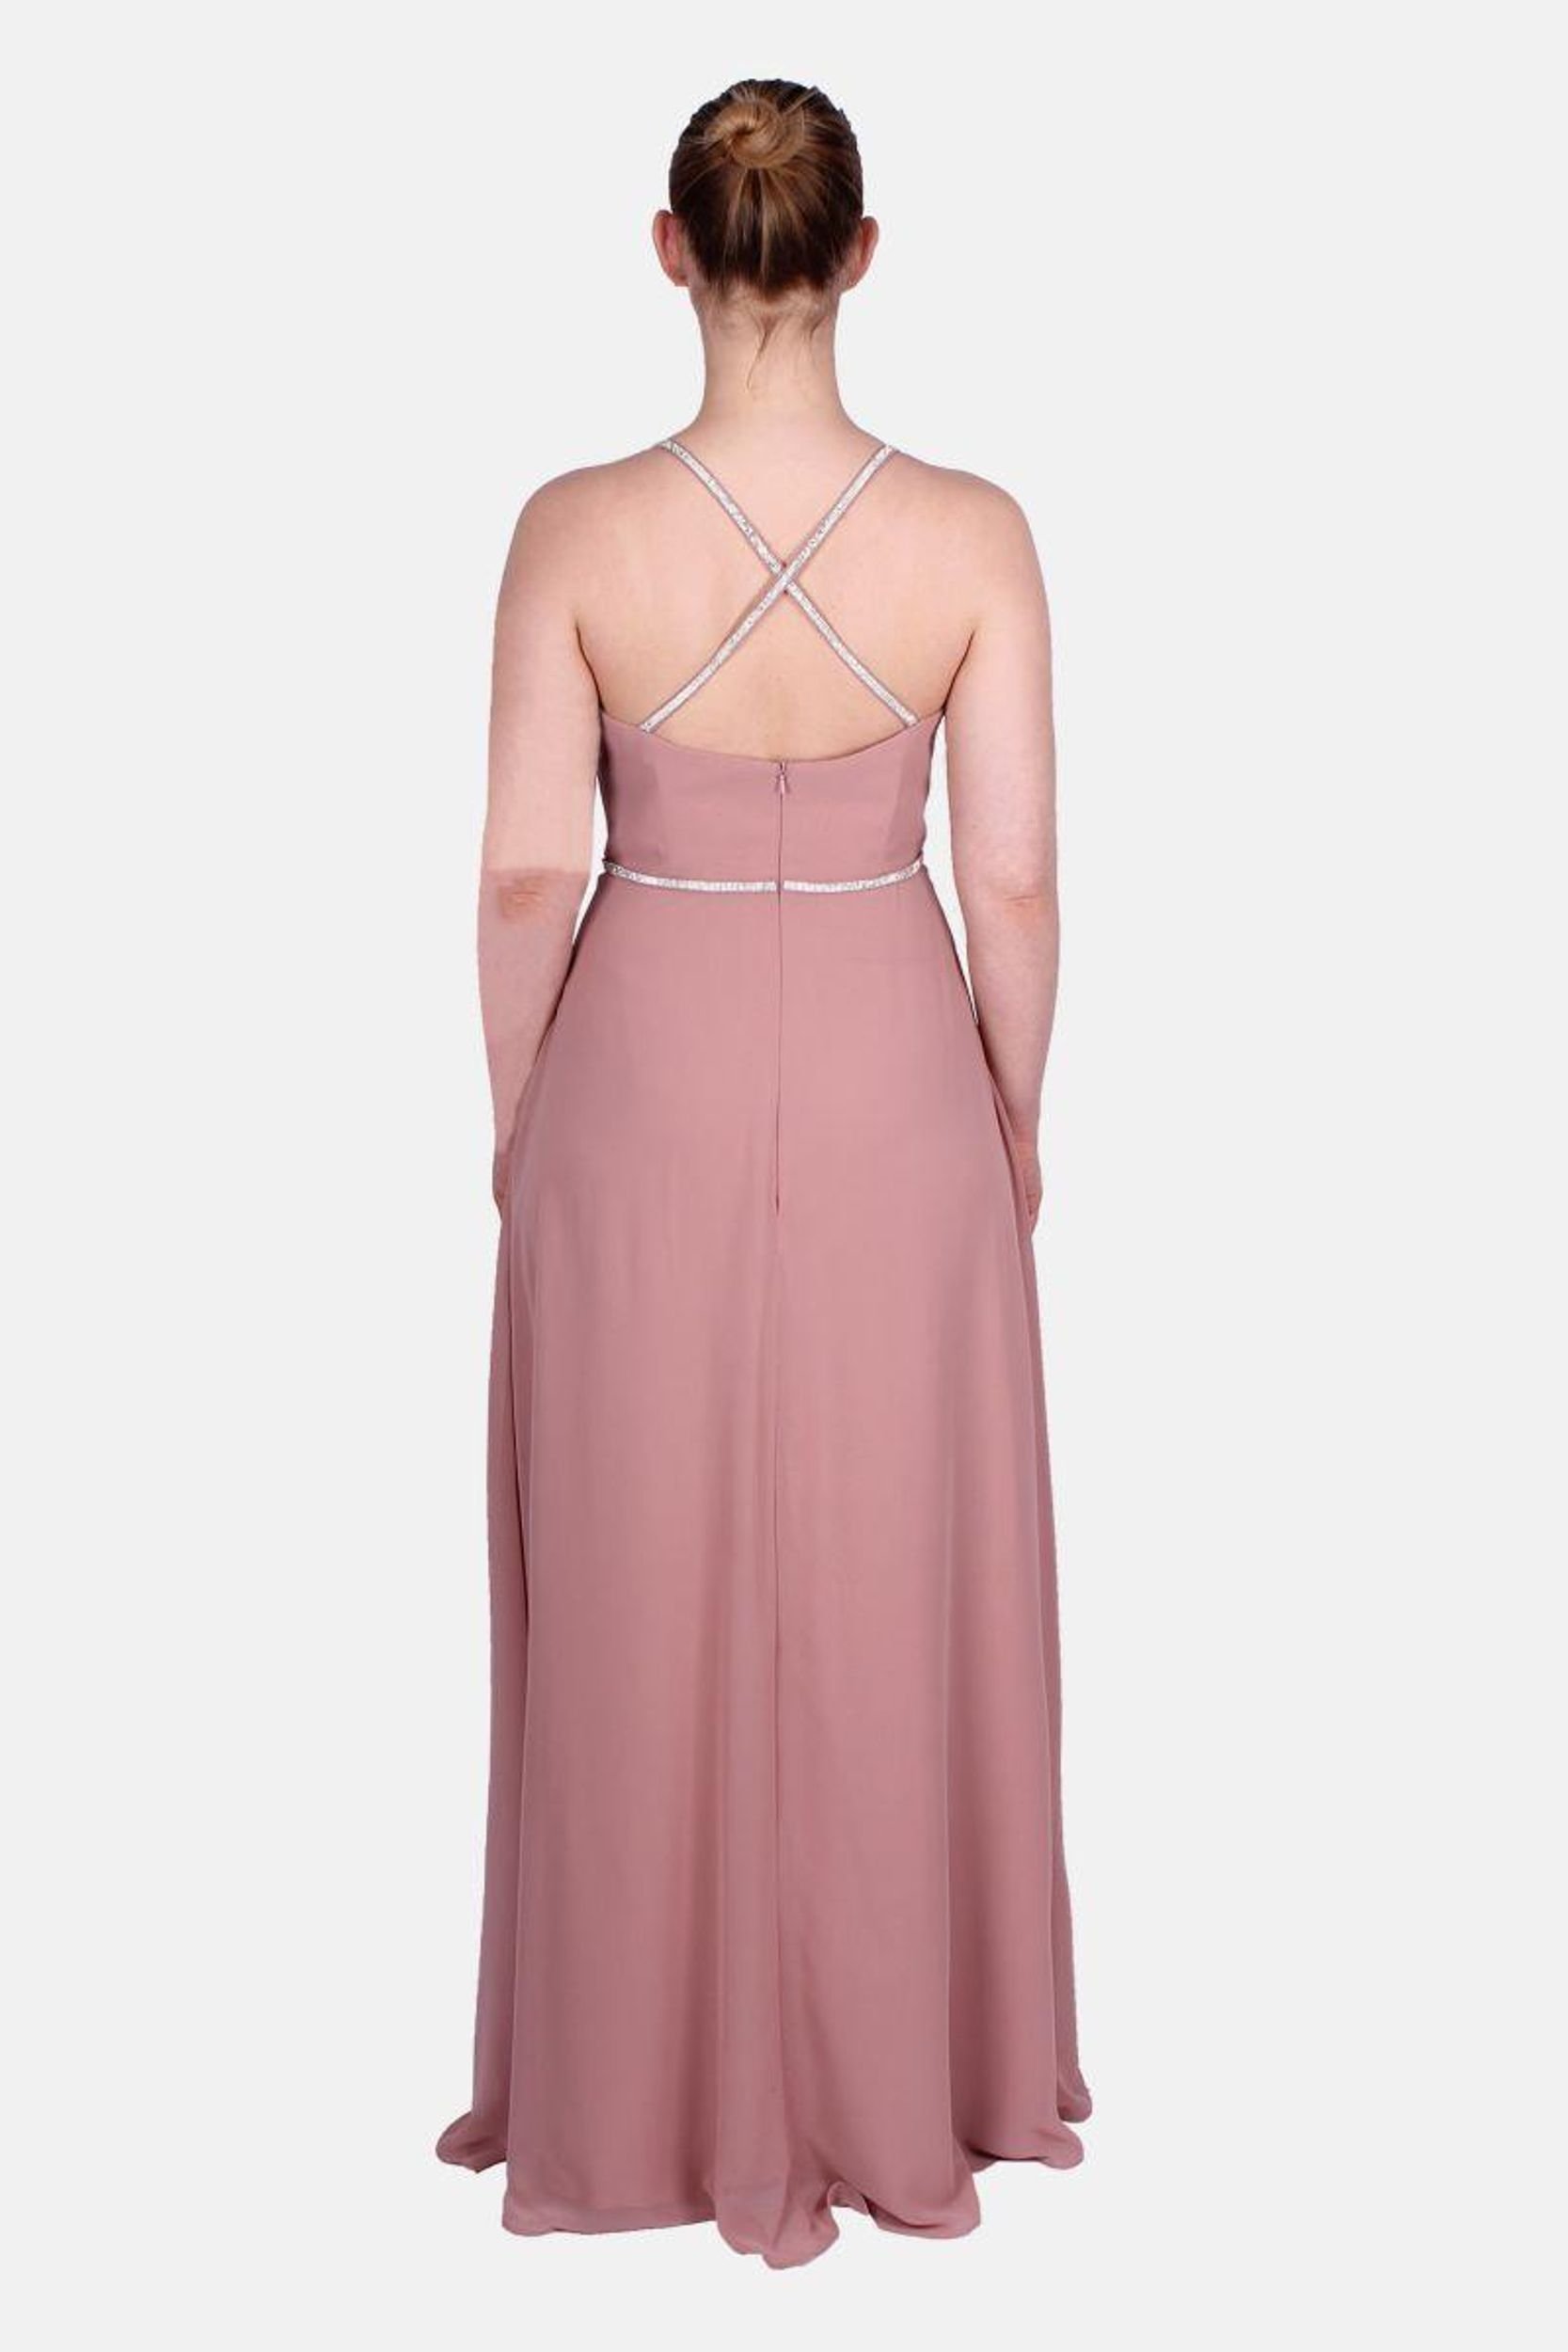 Luxuar Langes Kleid 